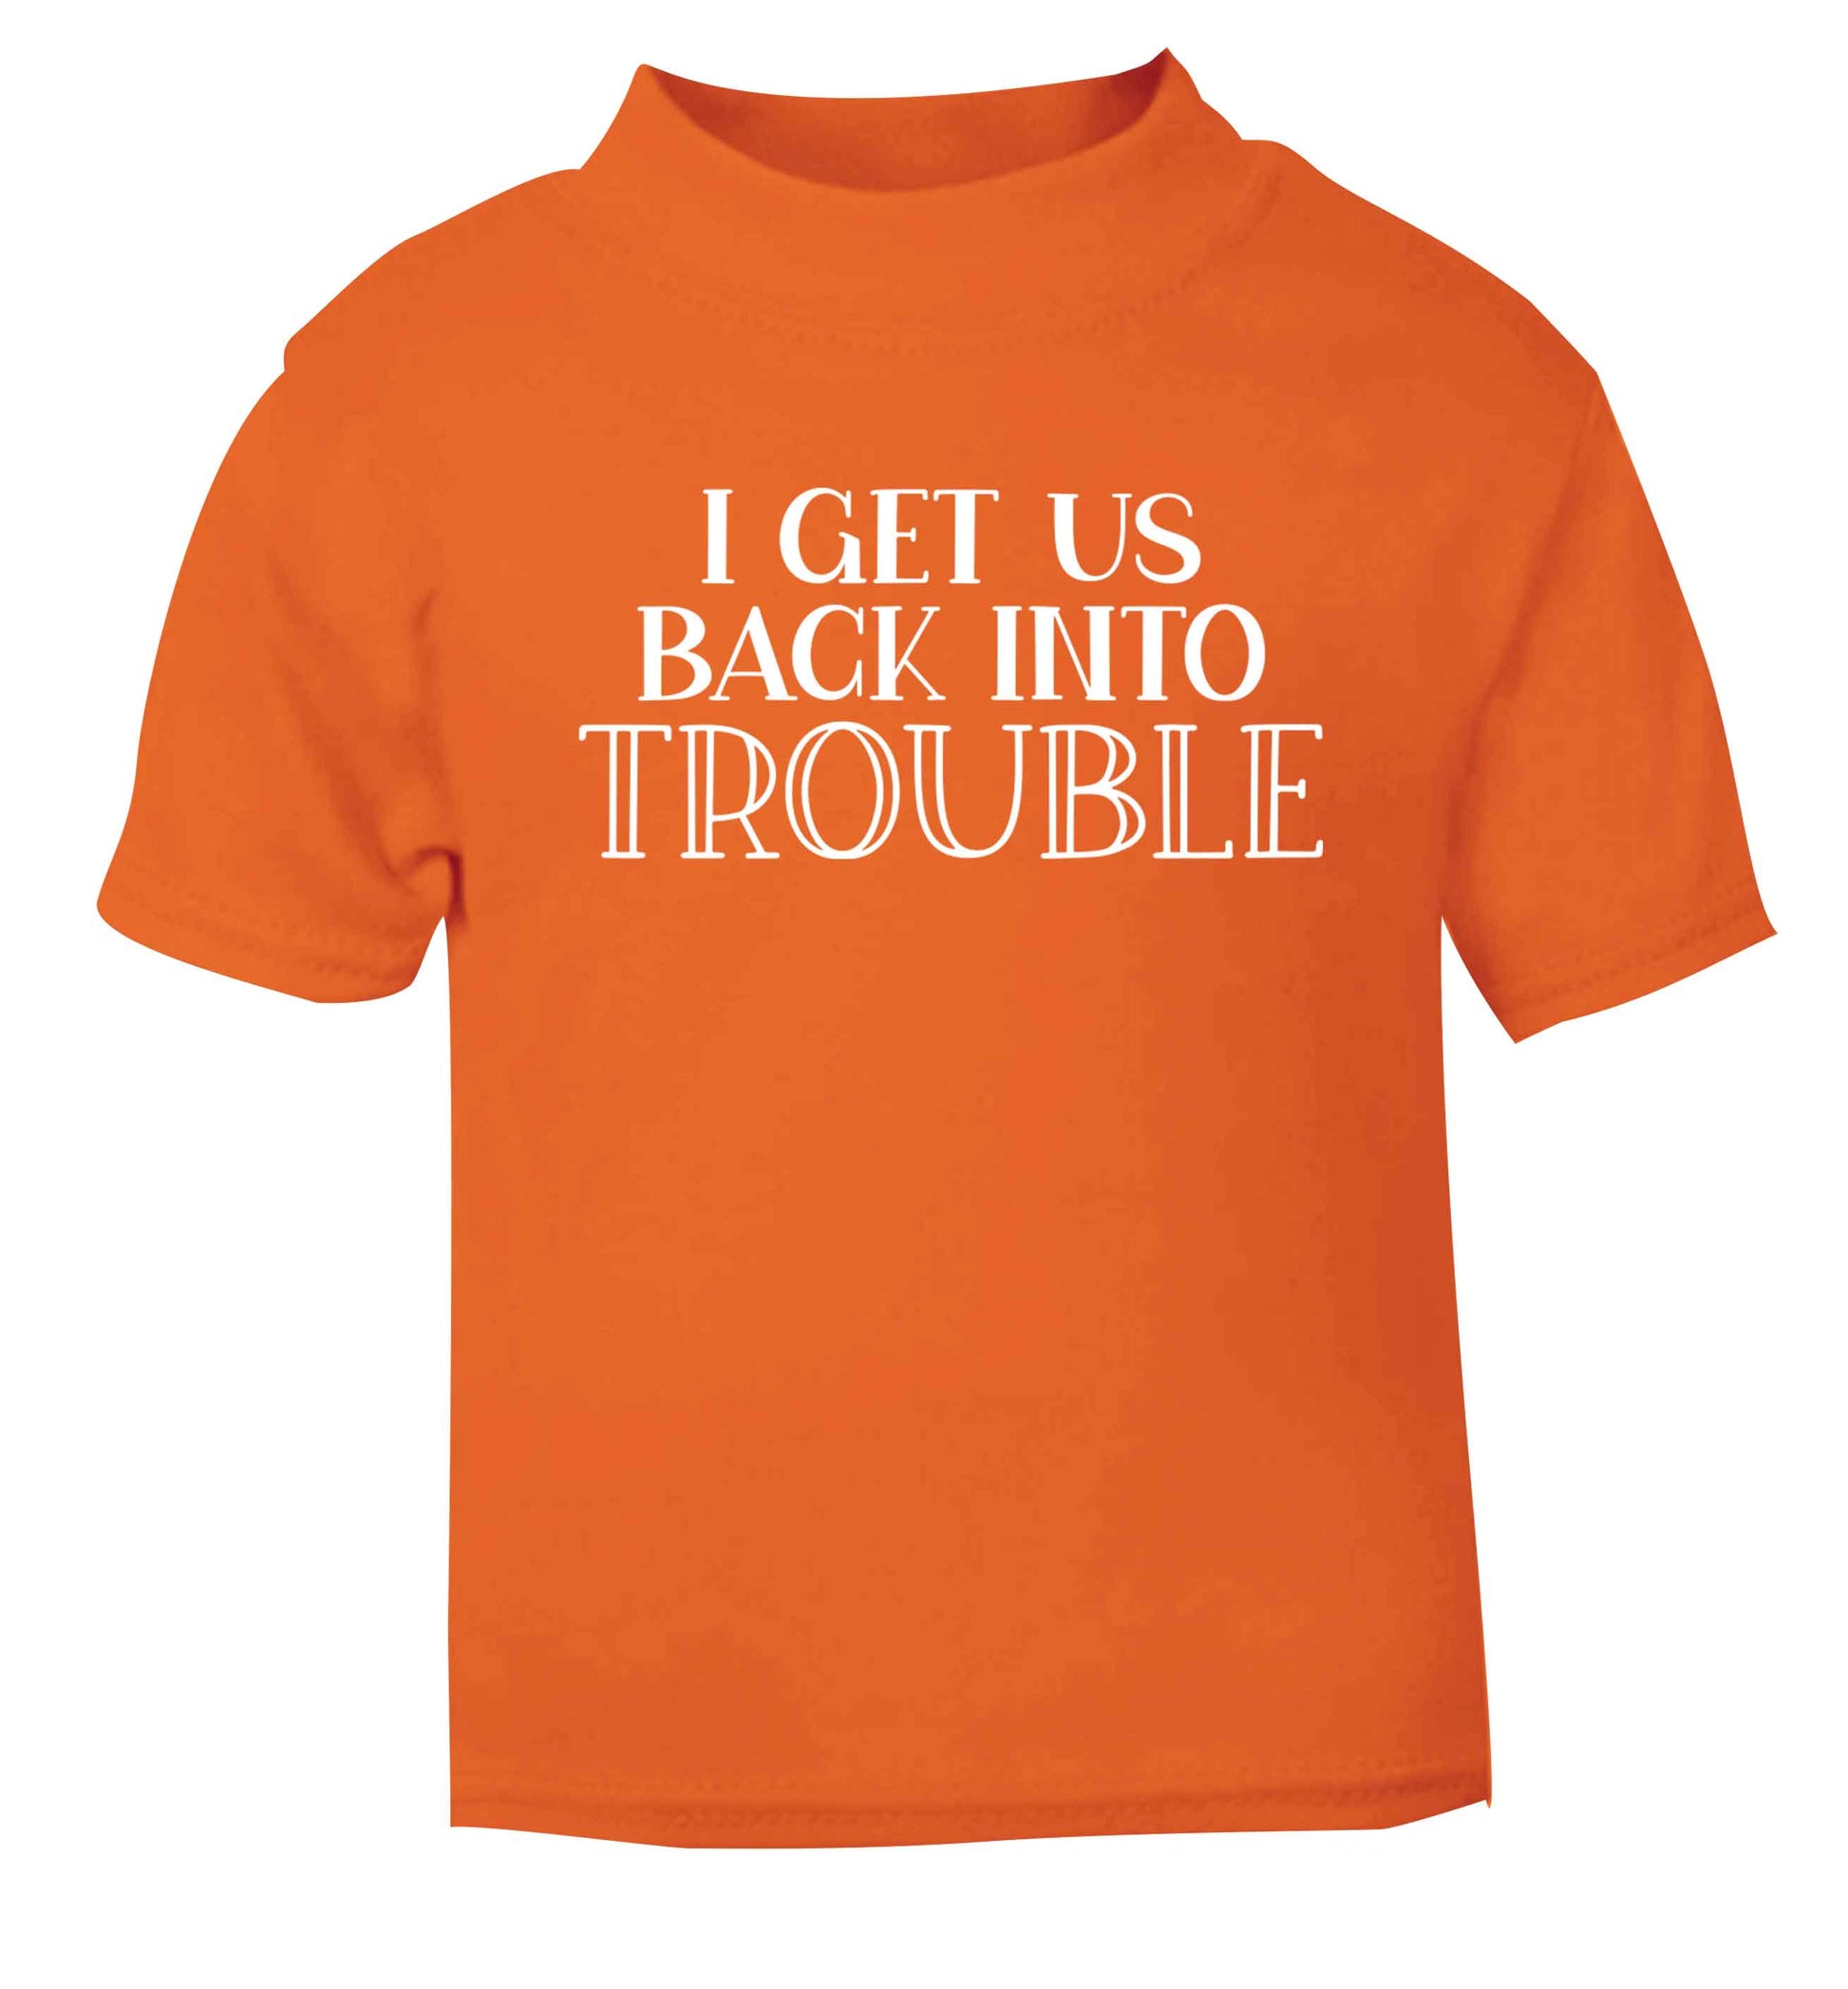 I get us back into trouble orange baby toddler Tshirt 2 Years